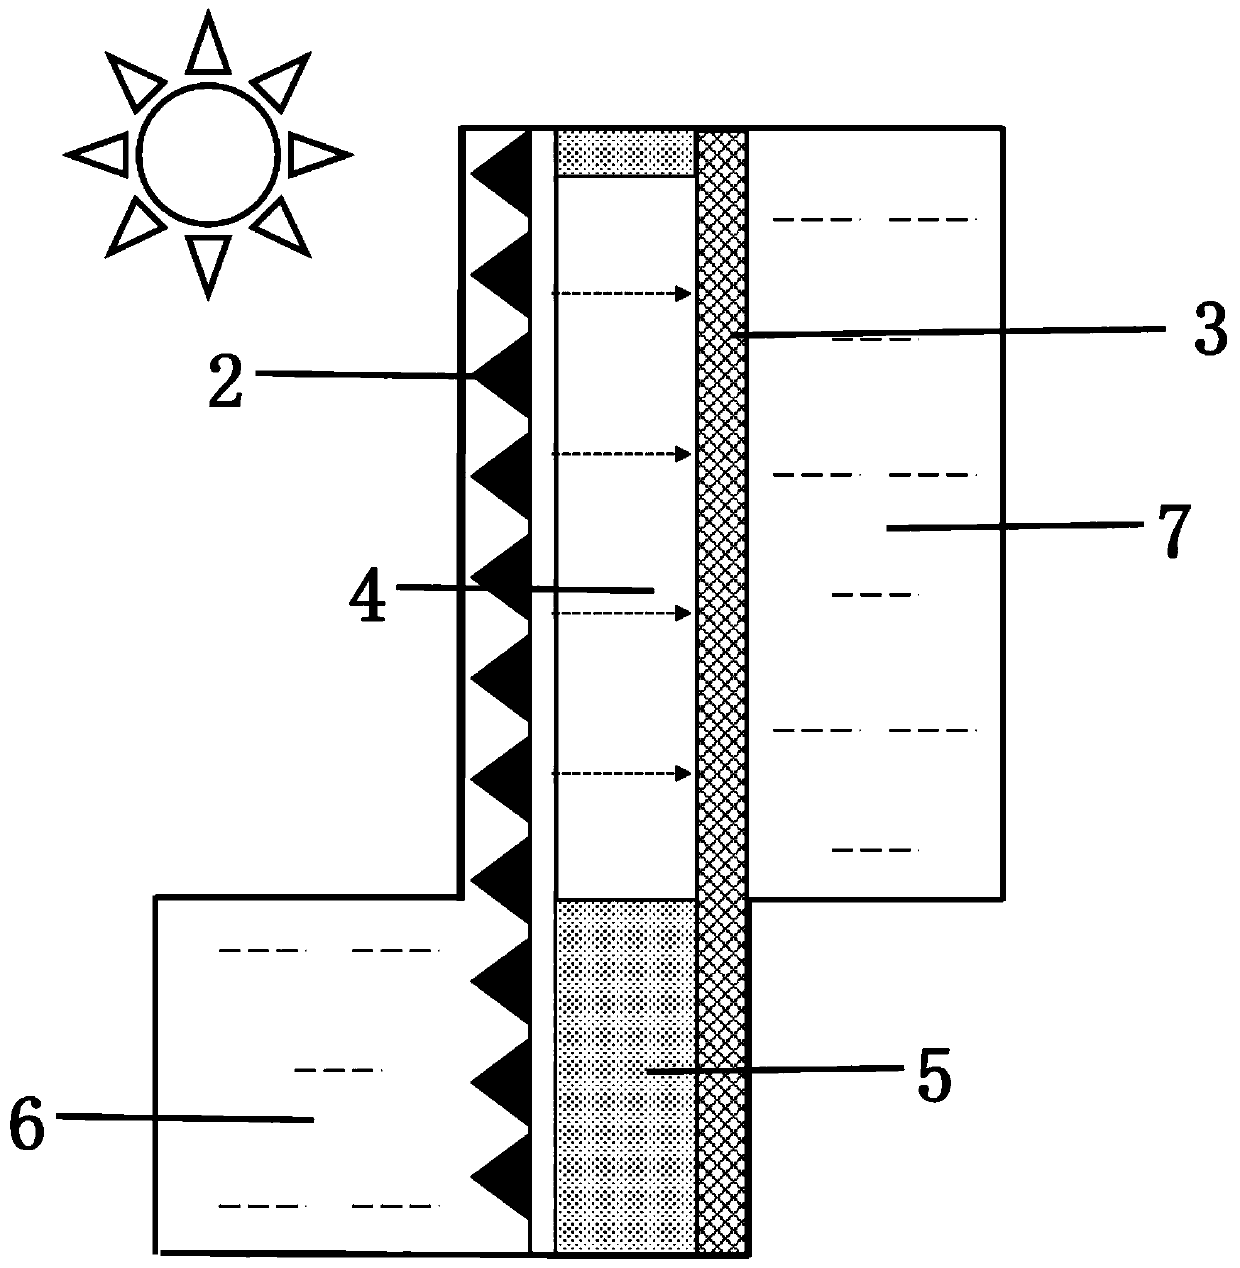 Solar thermal membrane distillation device